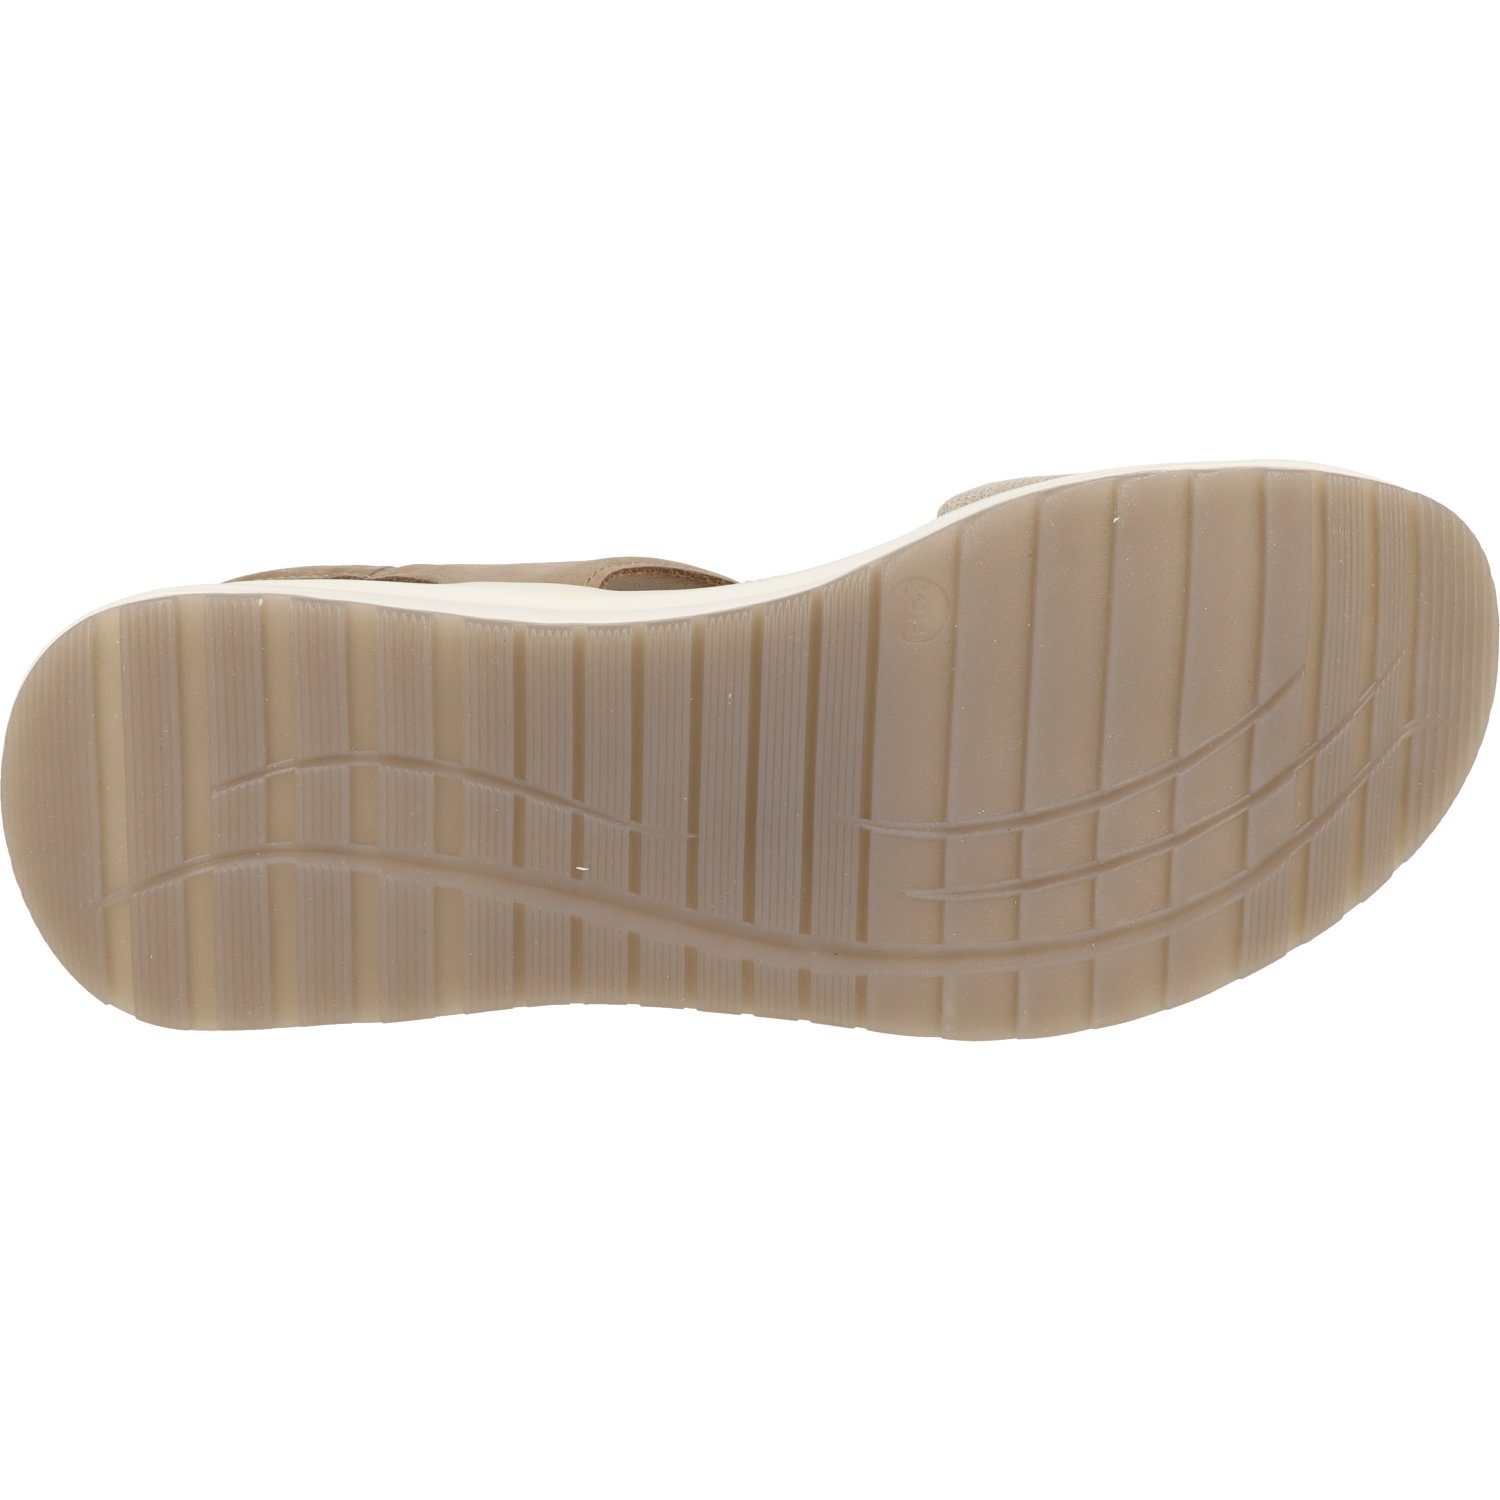 Caprice Damen Schuhe Klett Sandalette 9-28718-20 Sandalette Climotion H-Weite Mud Comb Leder